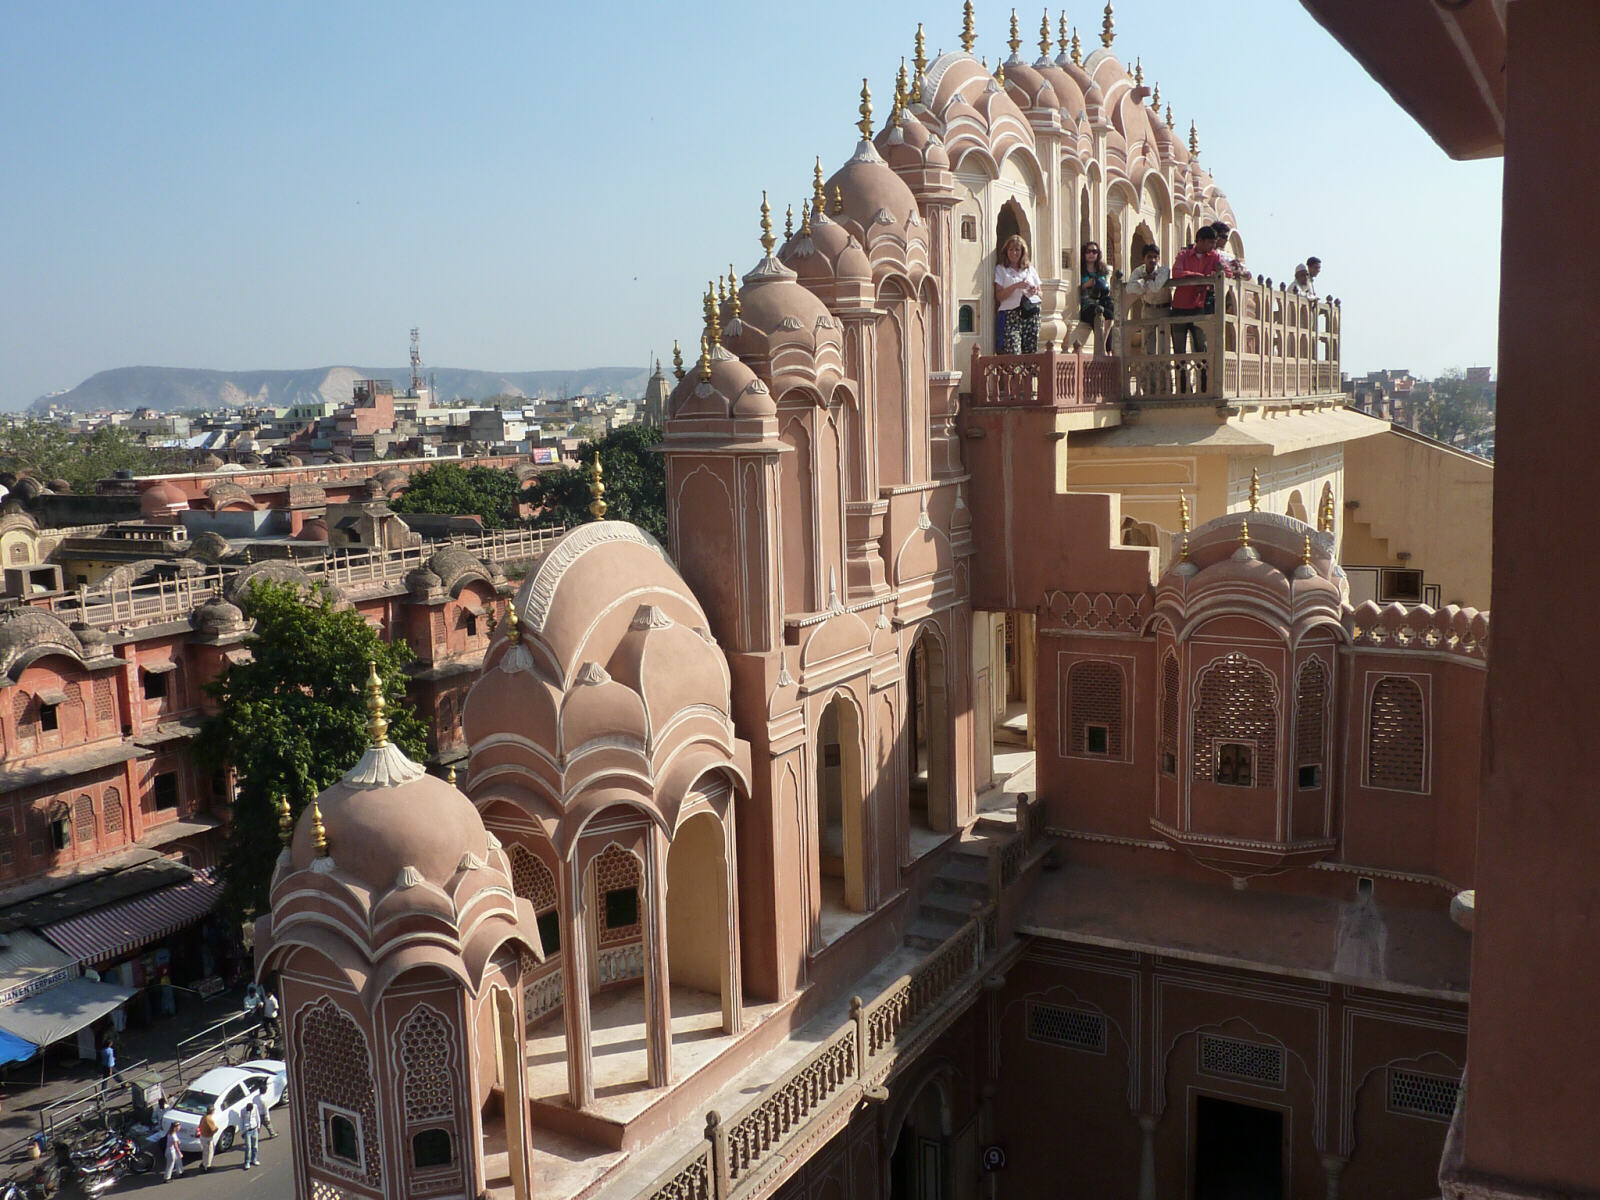 The Hawa Mahal (Palace of Winds) in Jaipur, Rajasthan